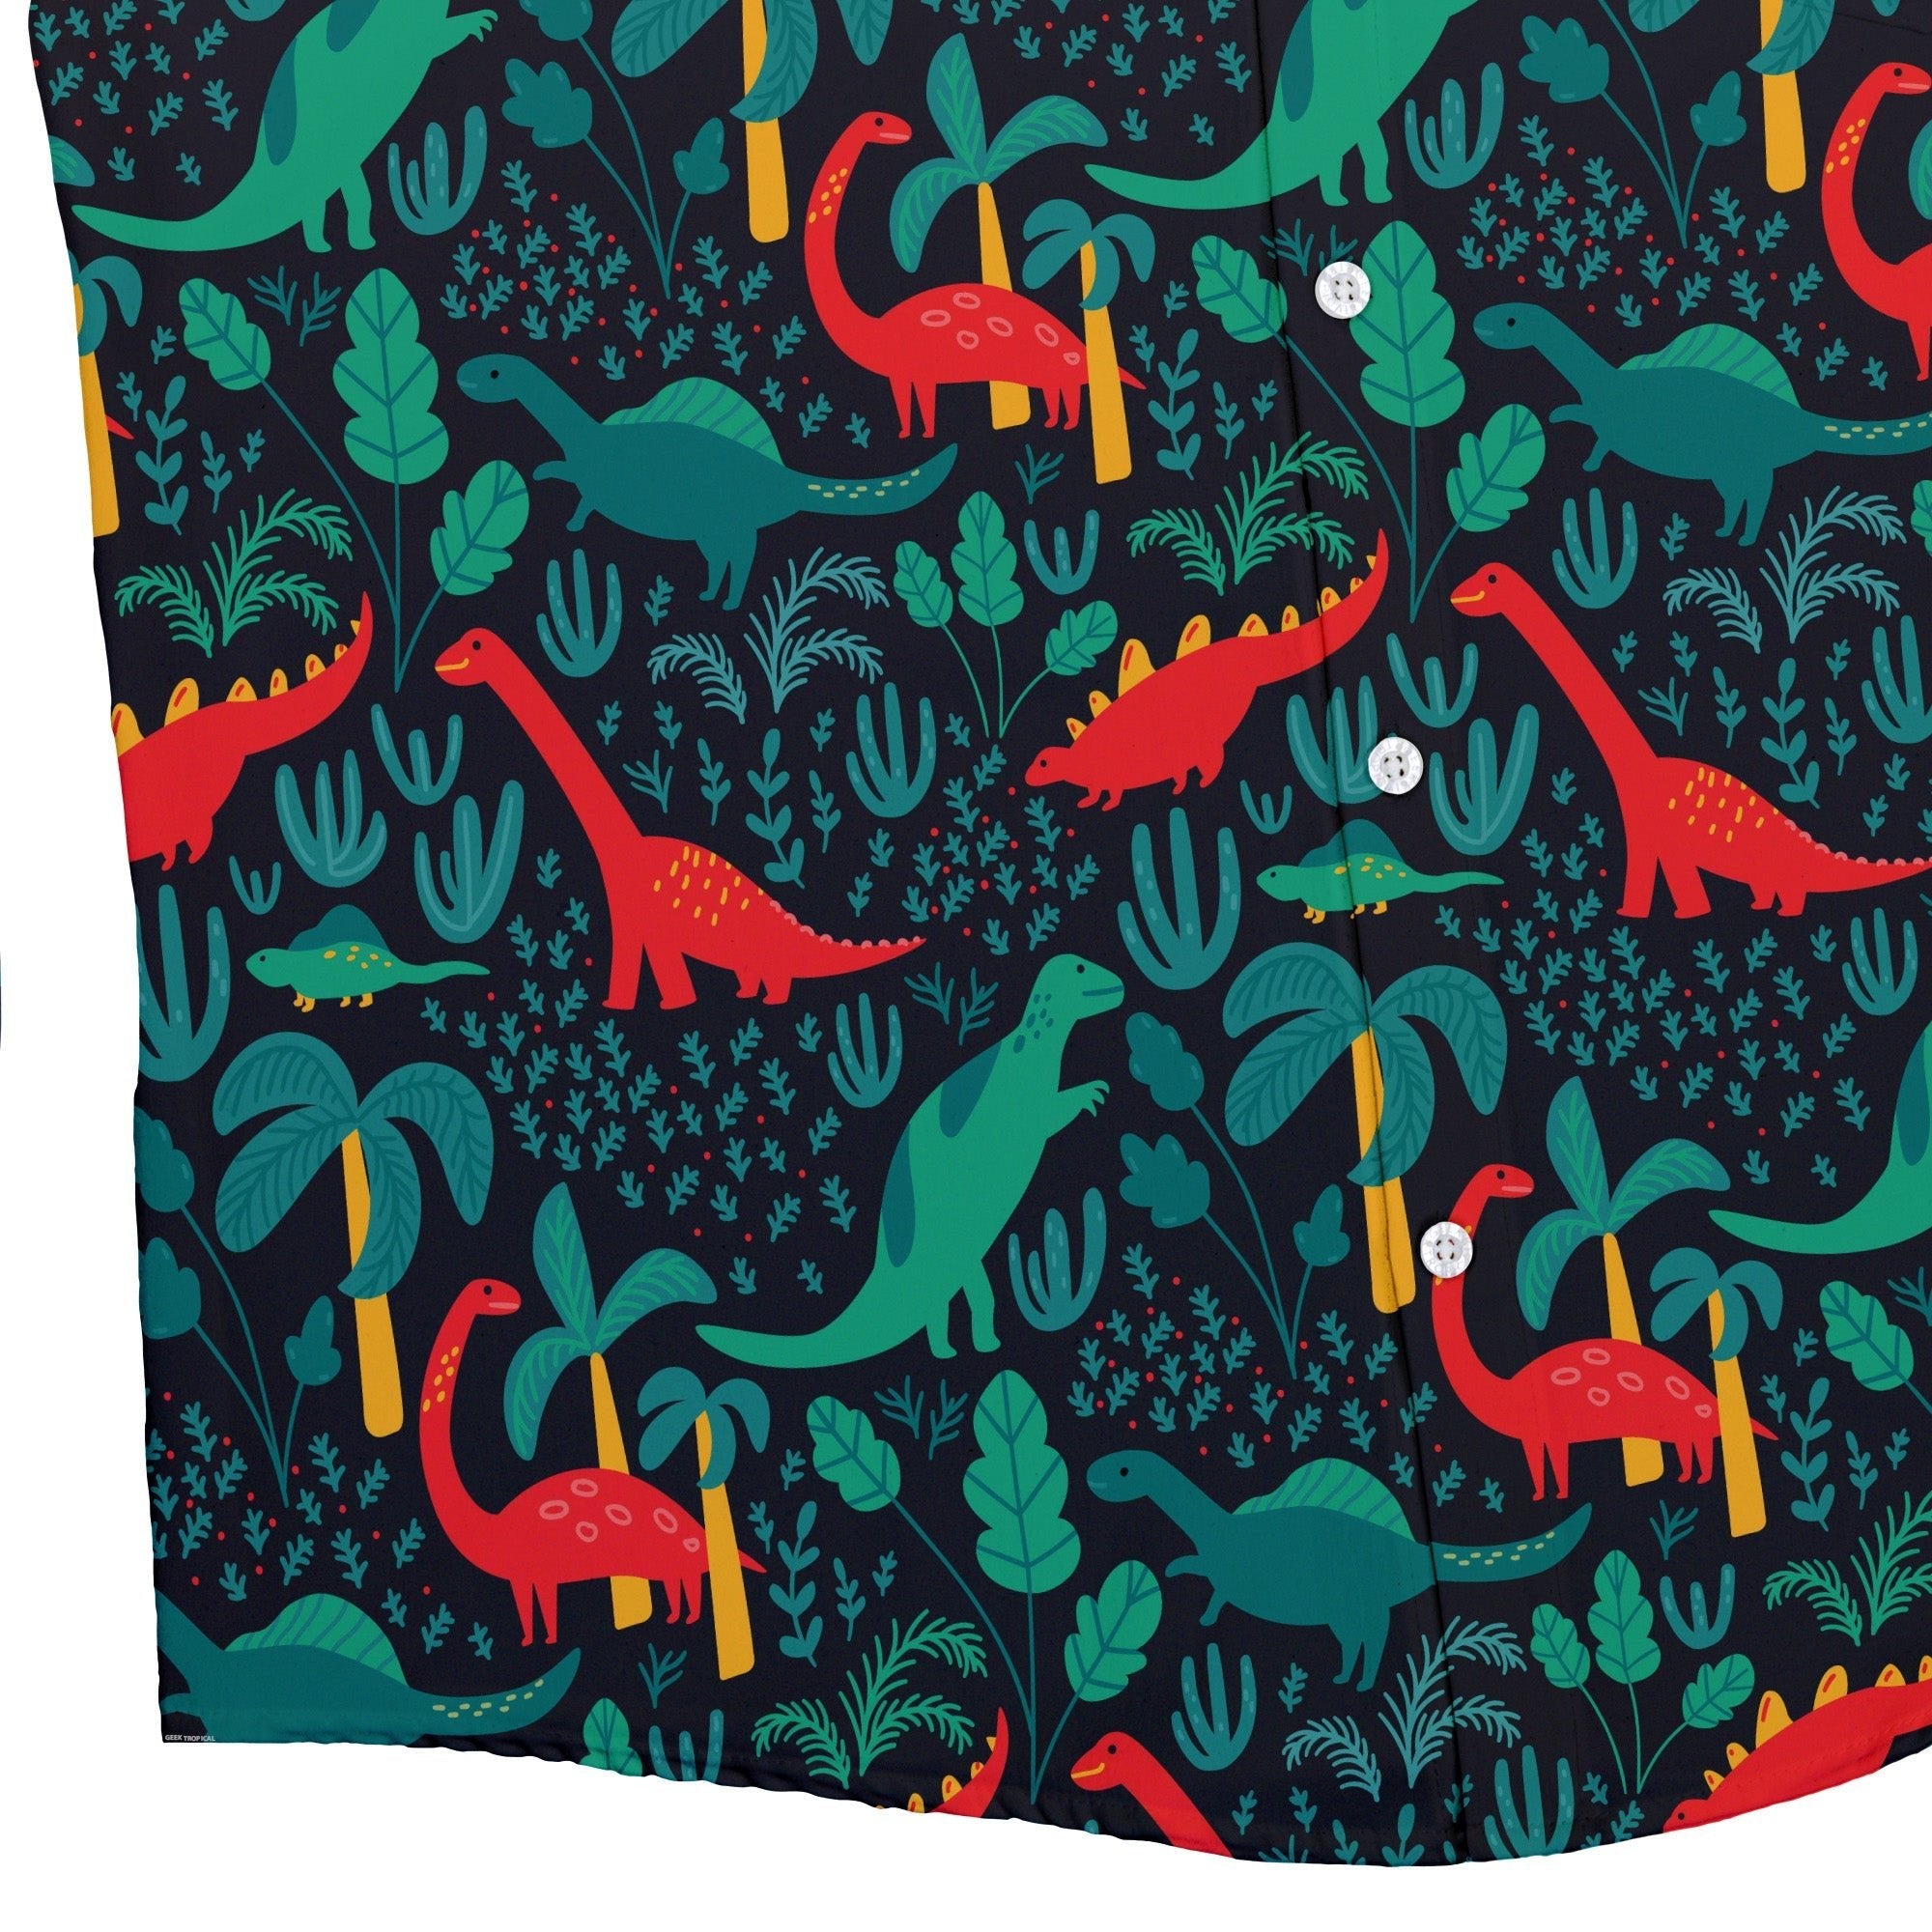 Tropical Dinosaur Green Aloha Button Up Shirt - adult sizing - dinosaur print - Maximalist Patterns